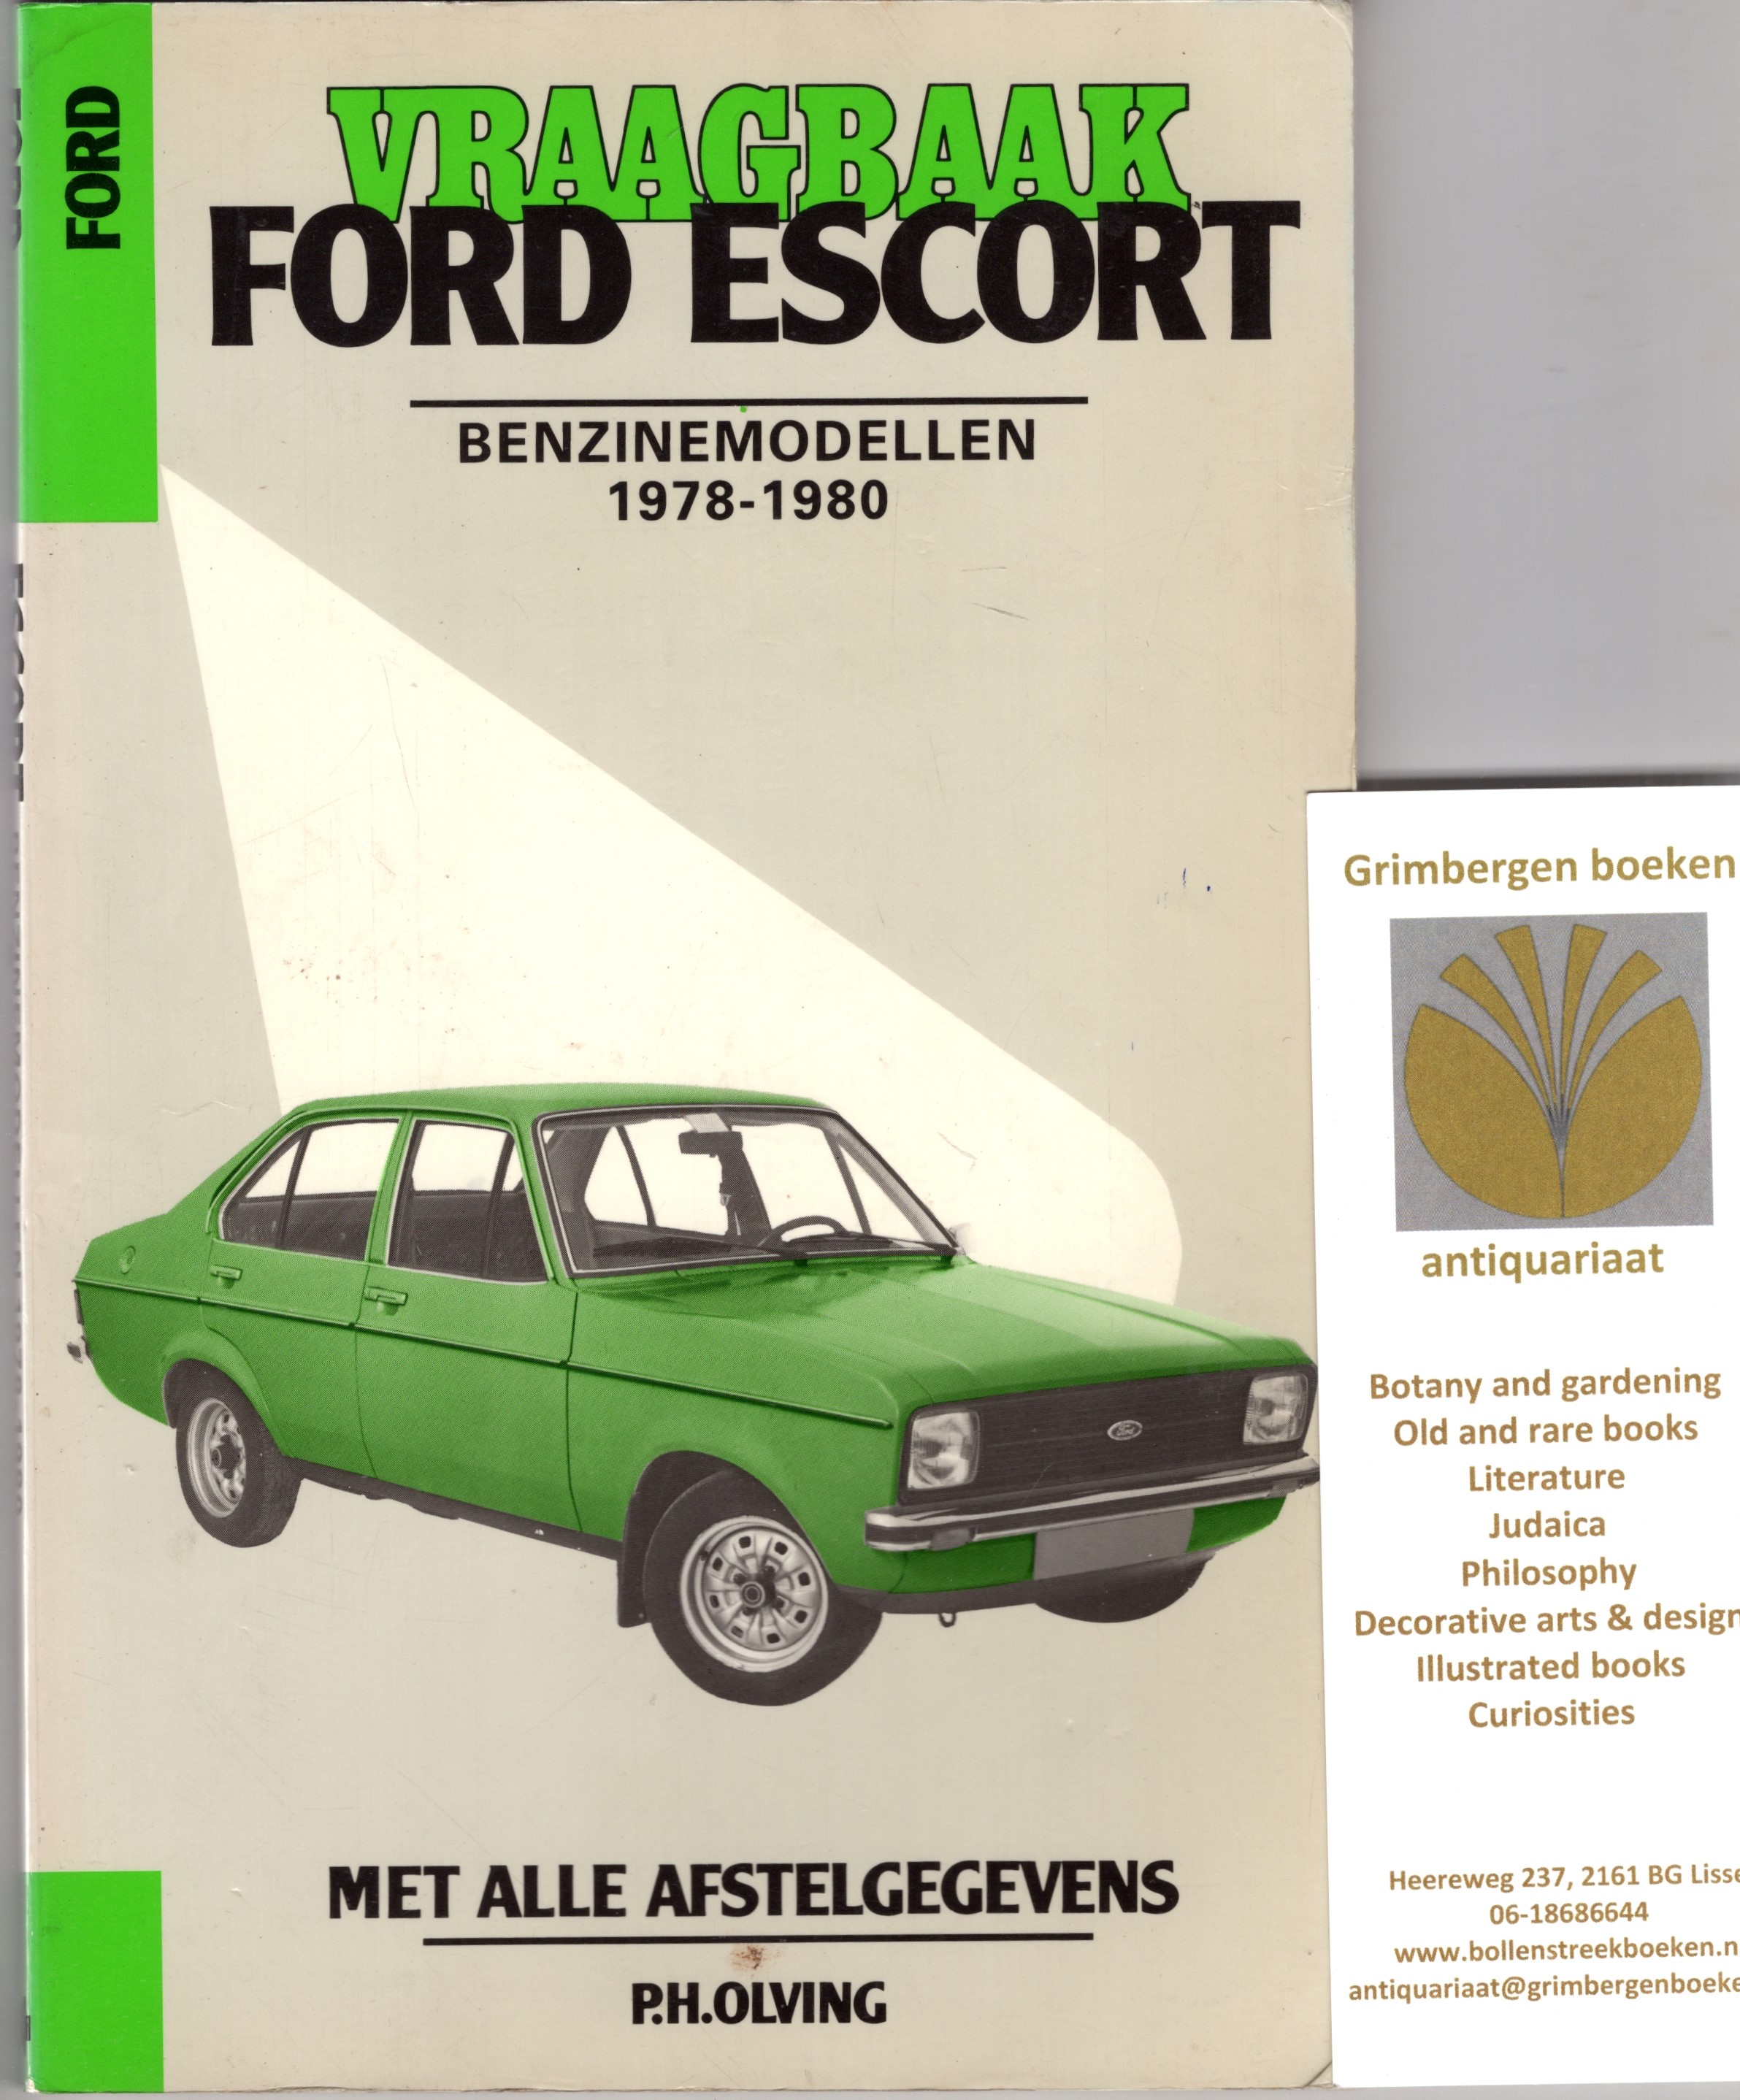 Olving, P. H. - Vraagbaak Ford Escort, Benzinemodellen 1978-1980. Met alle afstelgegevens. 